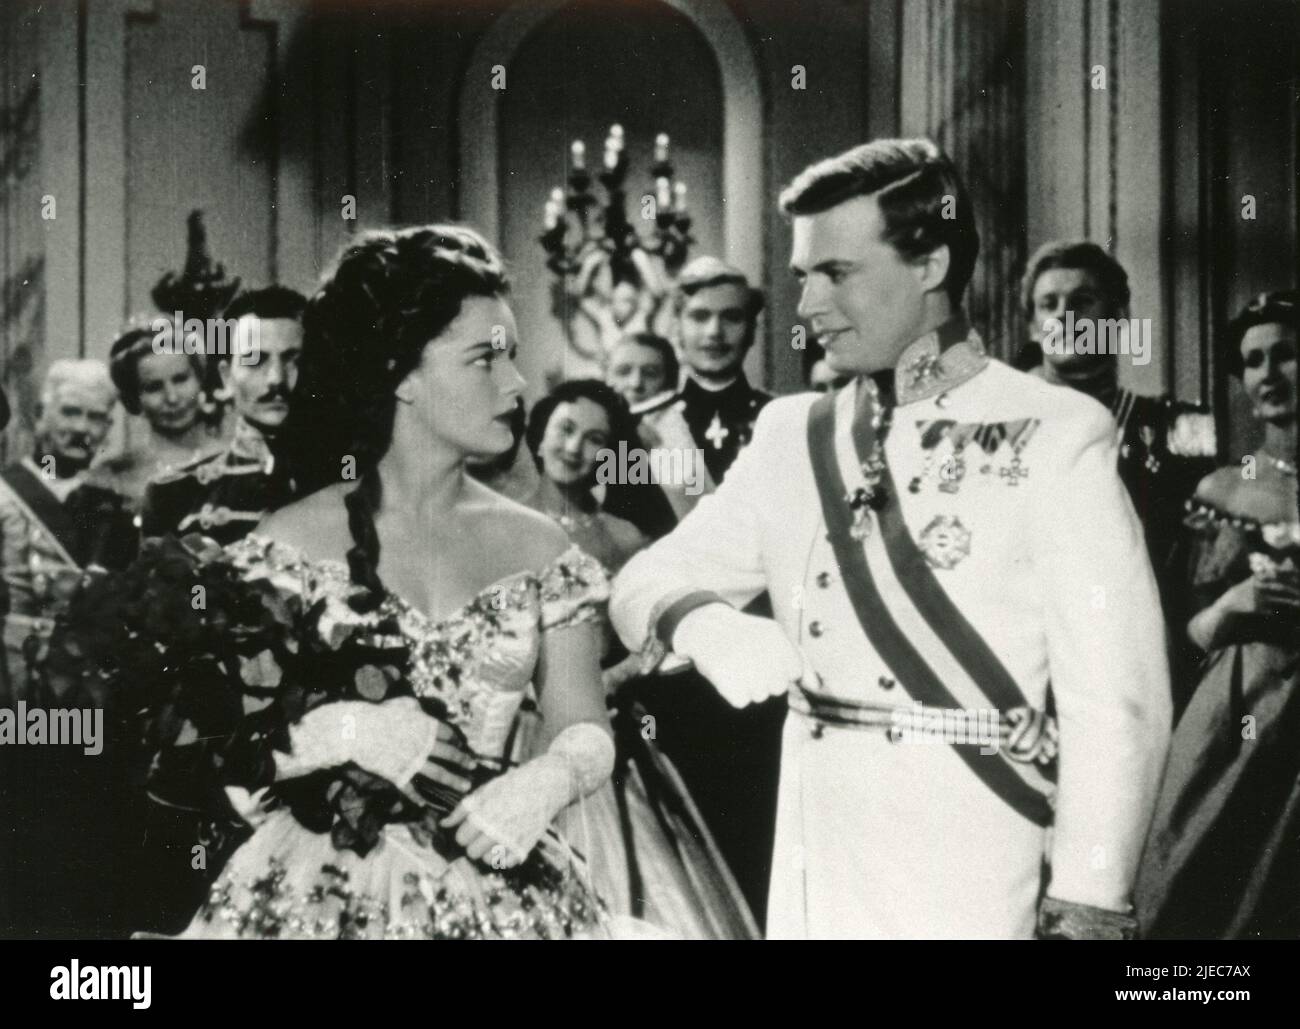 Actors Romy Schneider and Karlheinz Bohm in the movie Sissi, Austria 1955 Stock Photo